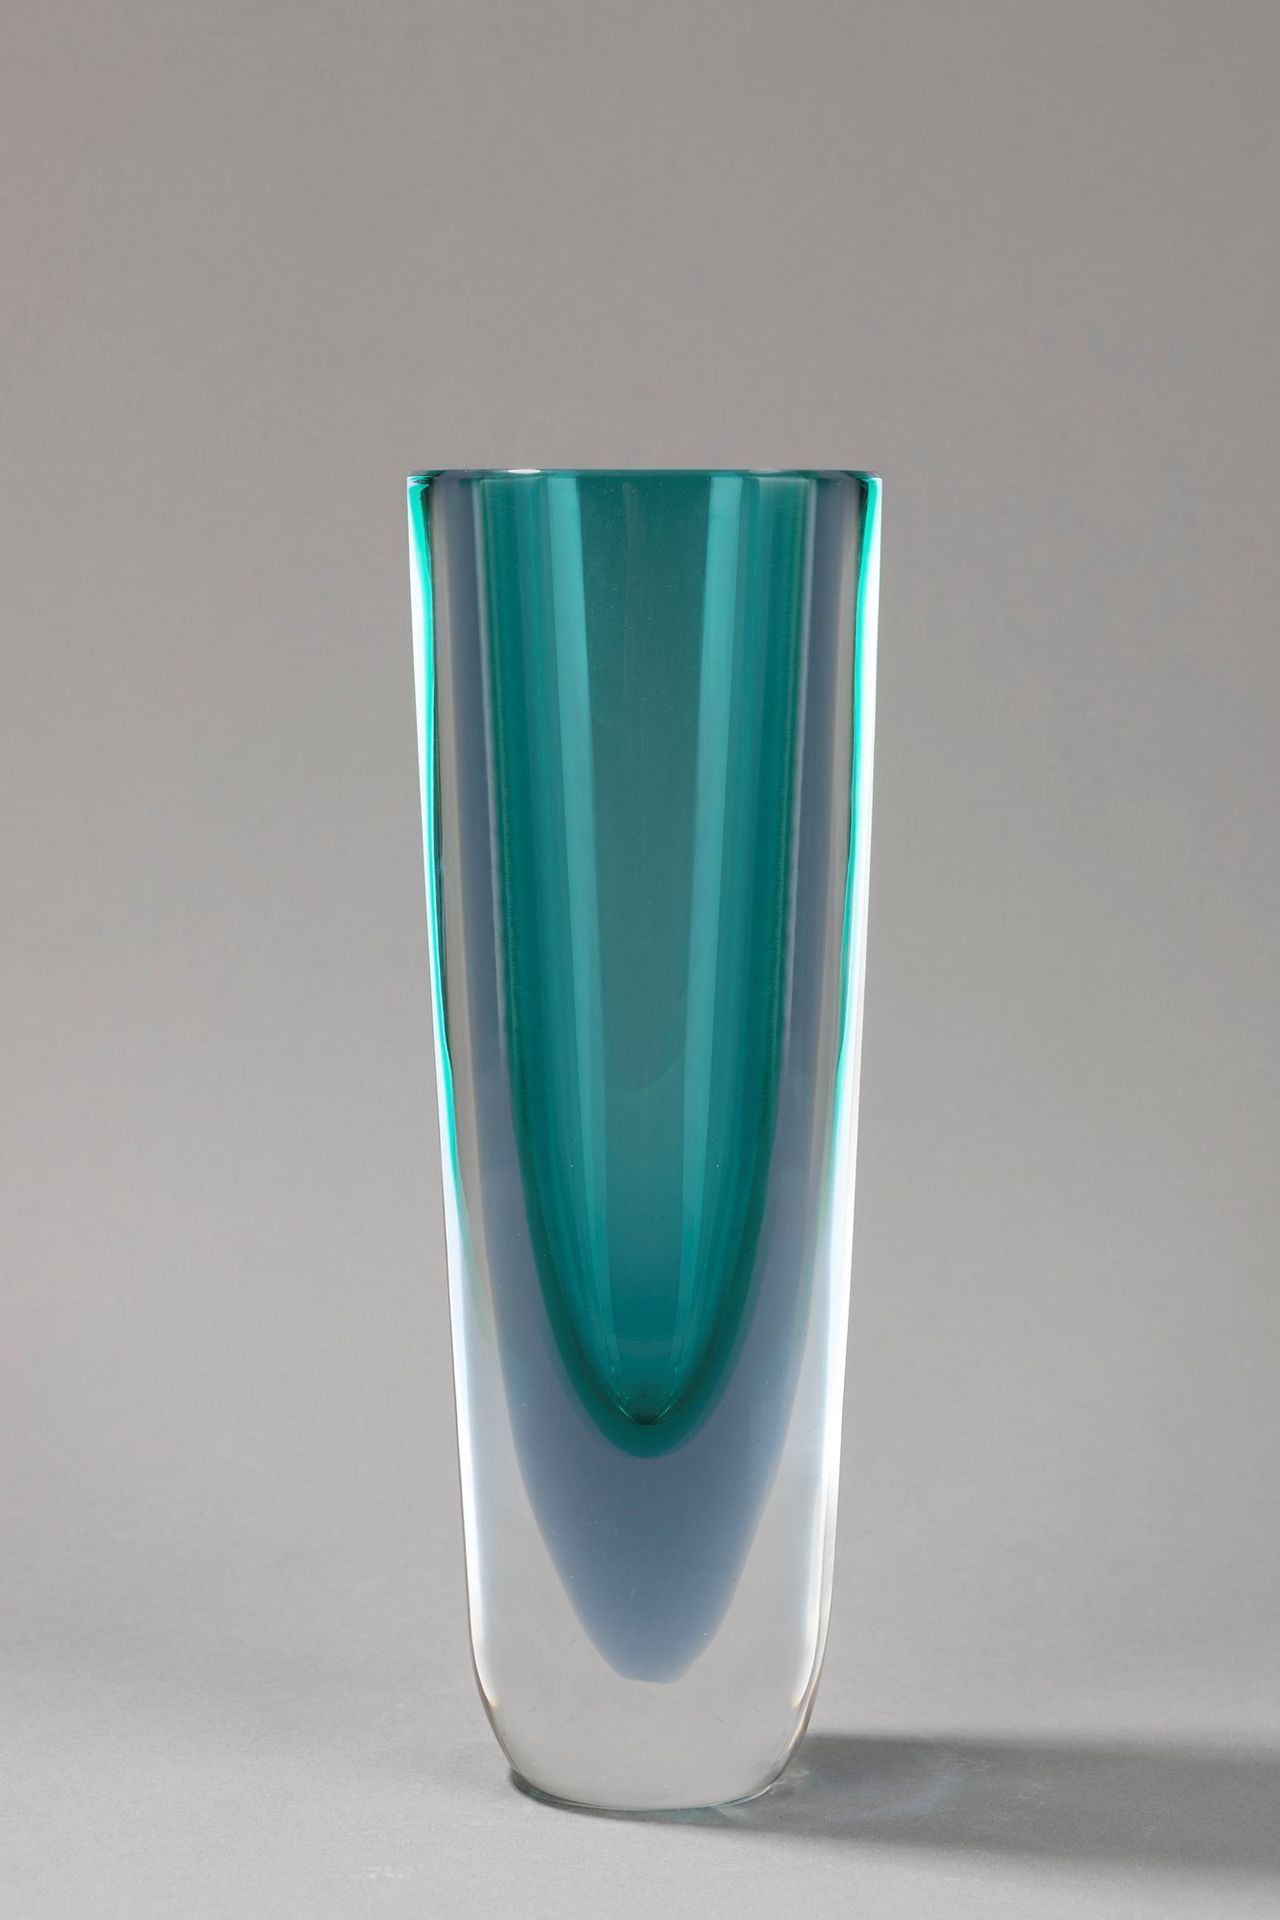 Seguso (attr.) Vase, 1950 ca.

H 30 x 12 x 6 cm
sommerso glas